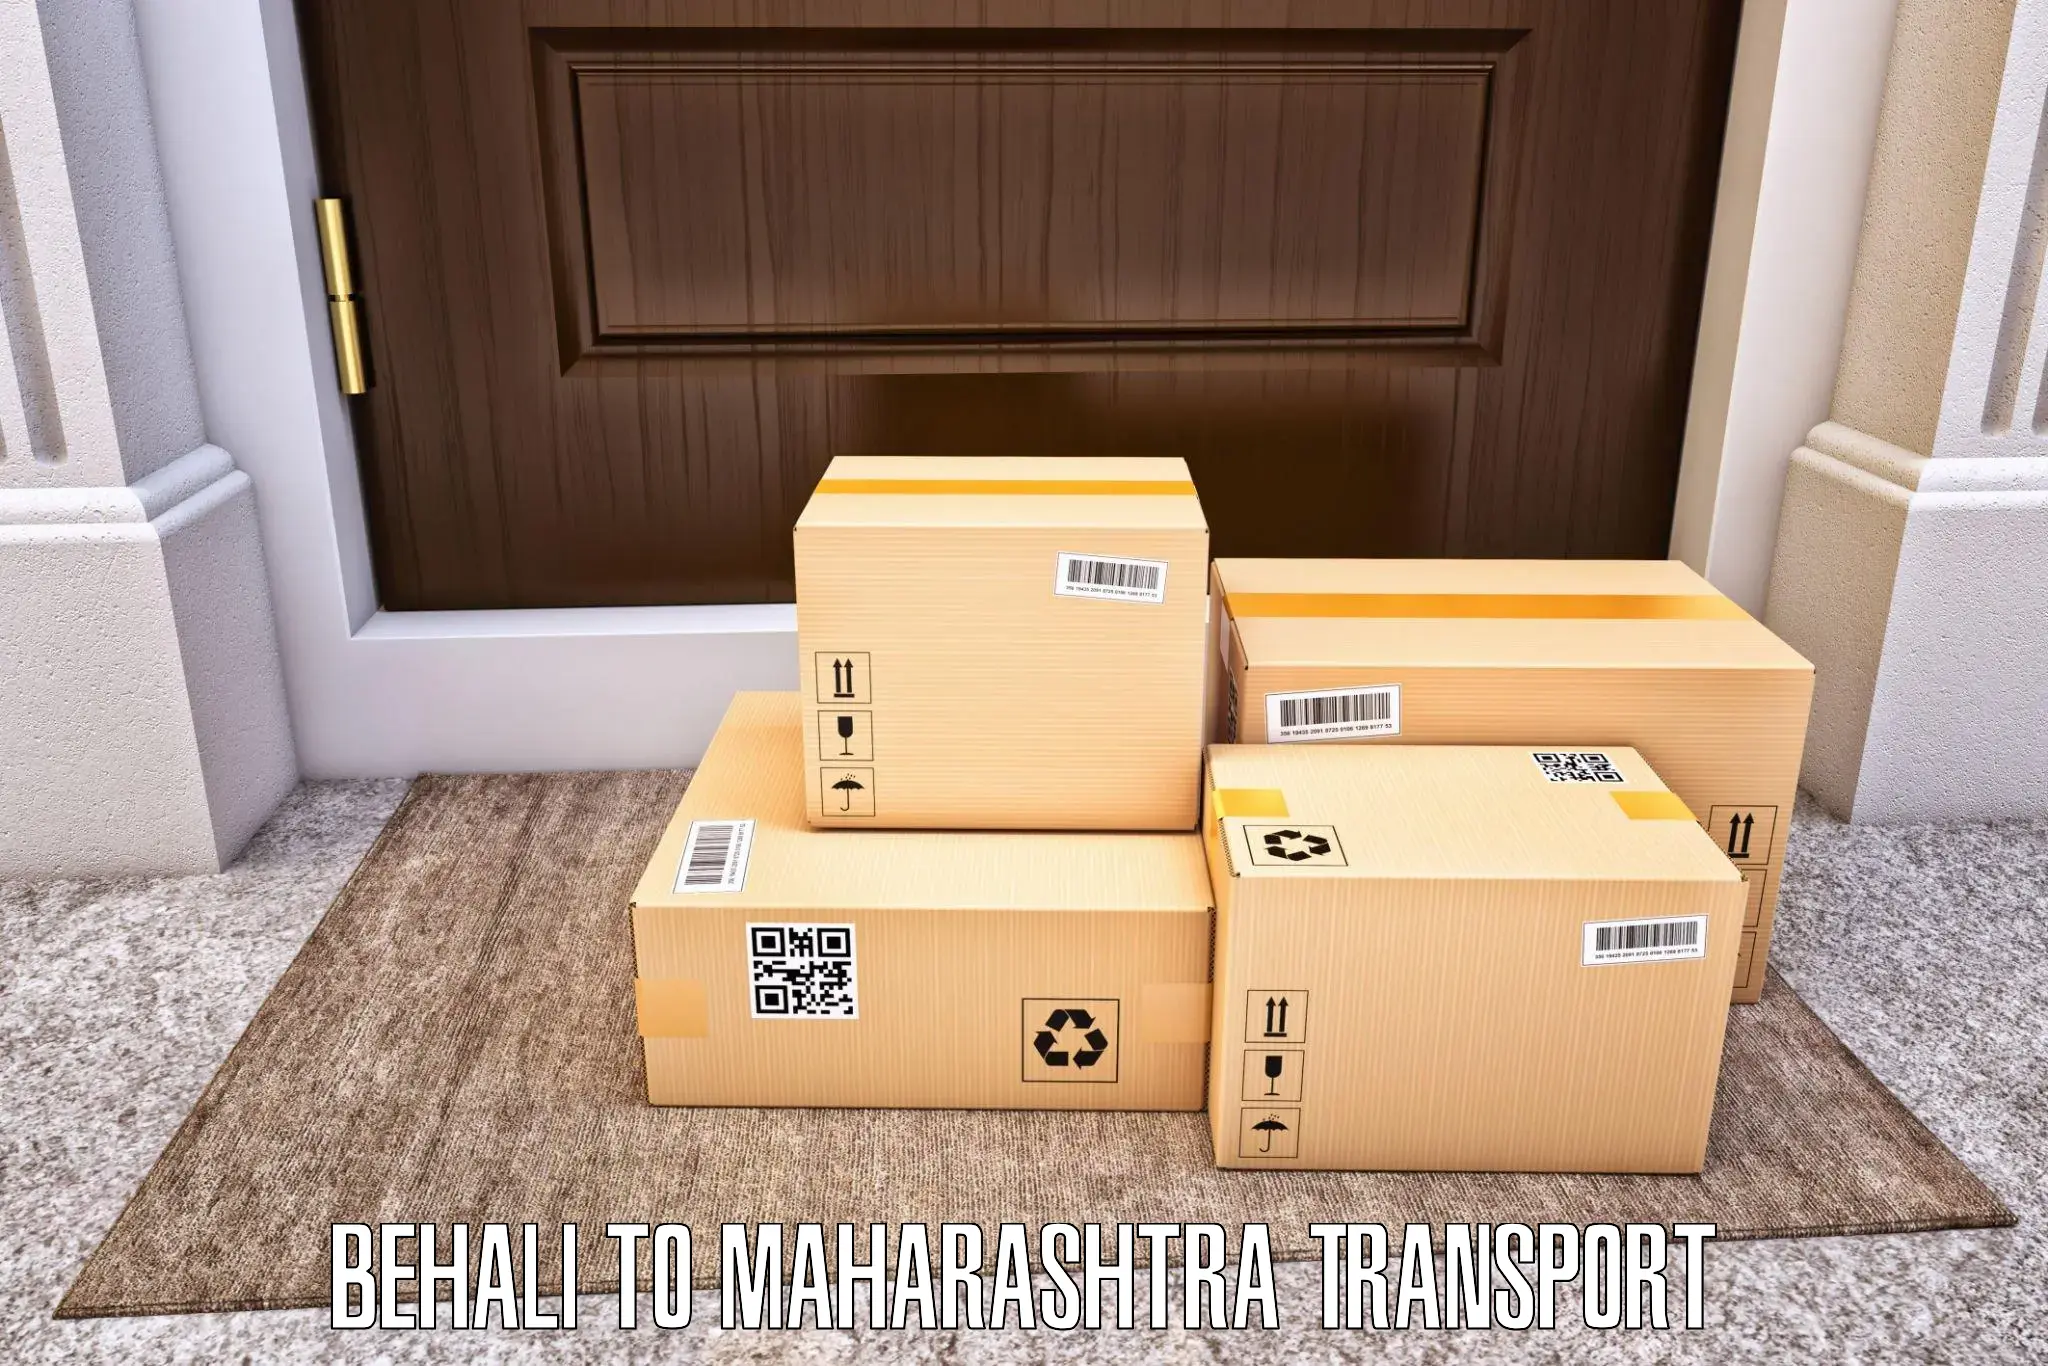 Truck transport companies in India Behali to Kalbadevi